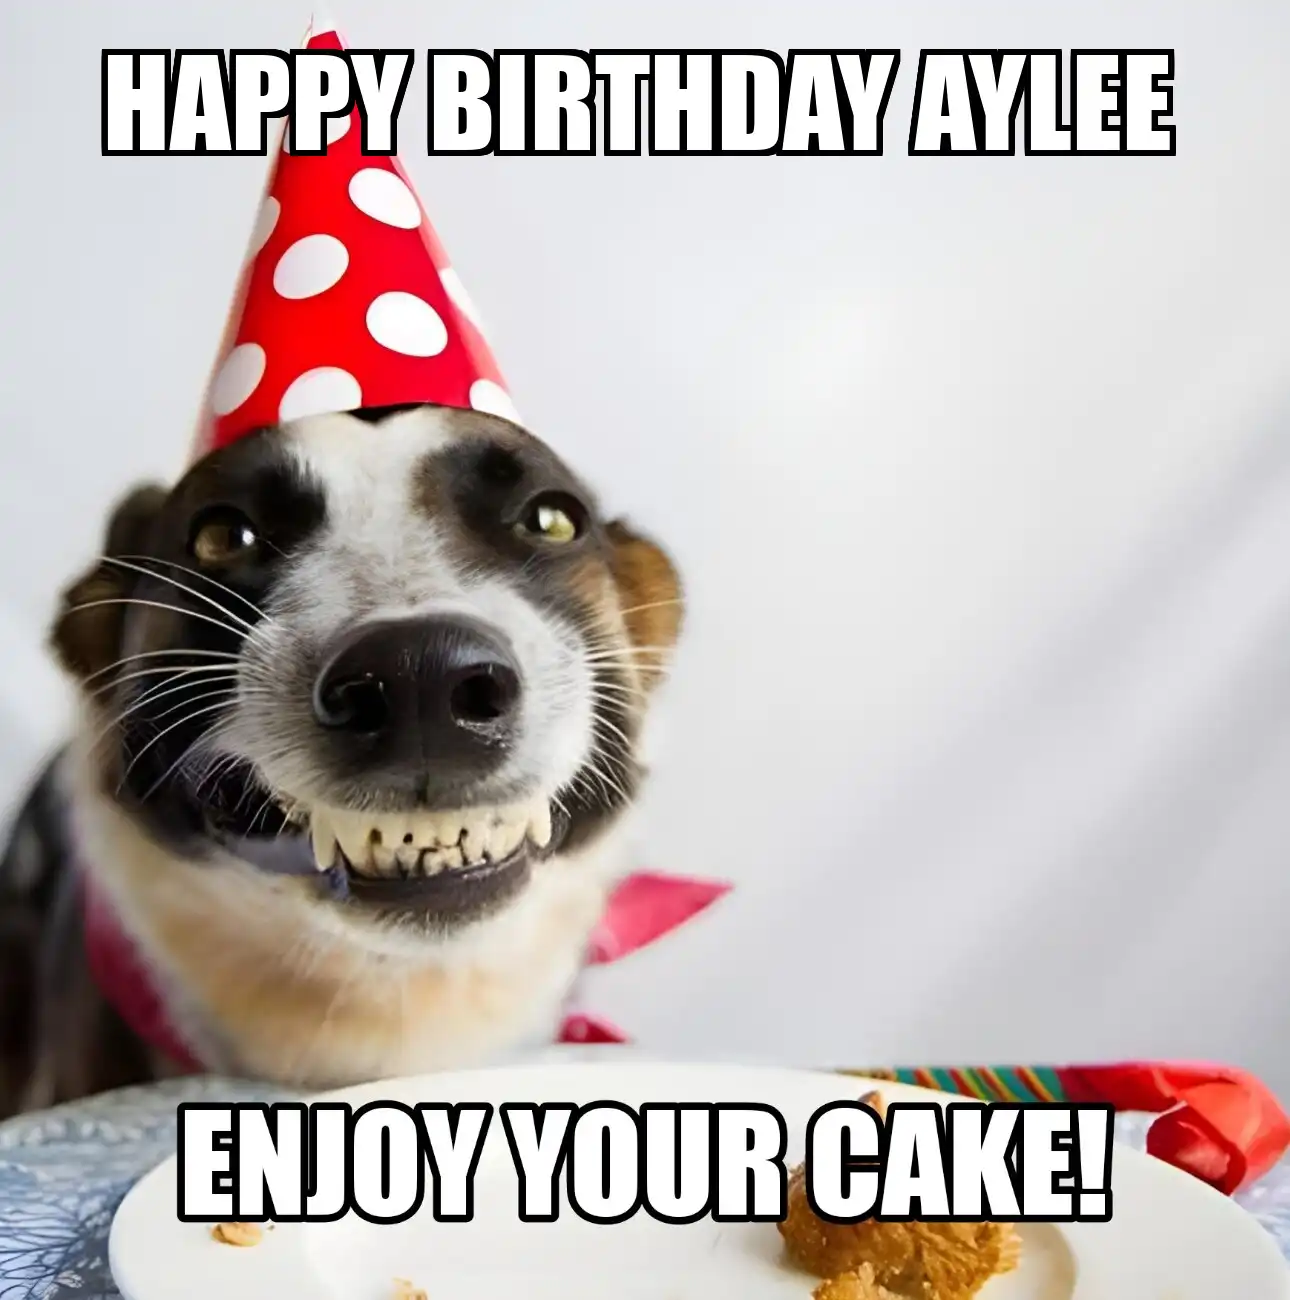 Happy Birthday Aylee Enjoy Your Cake Dog Meme